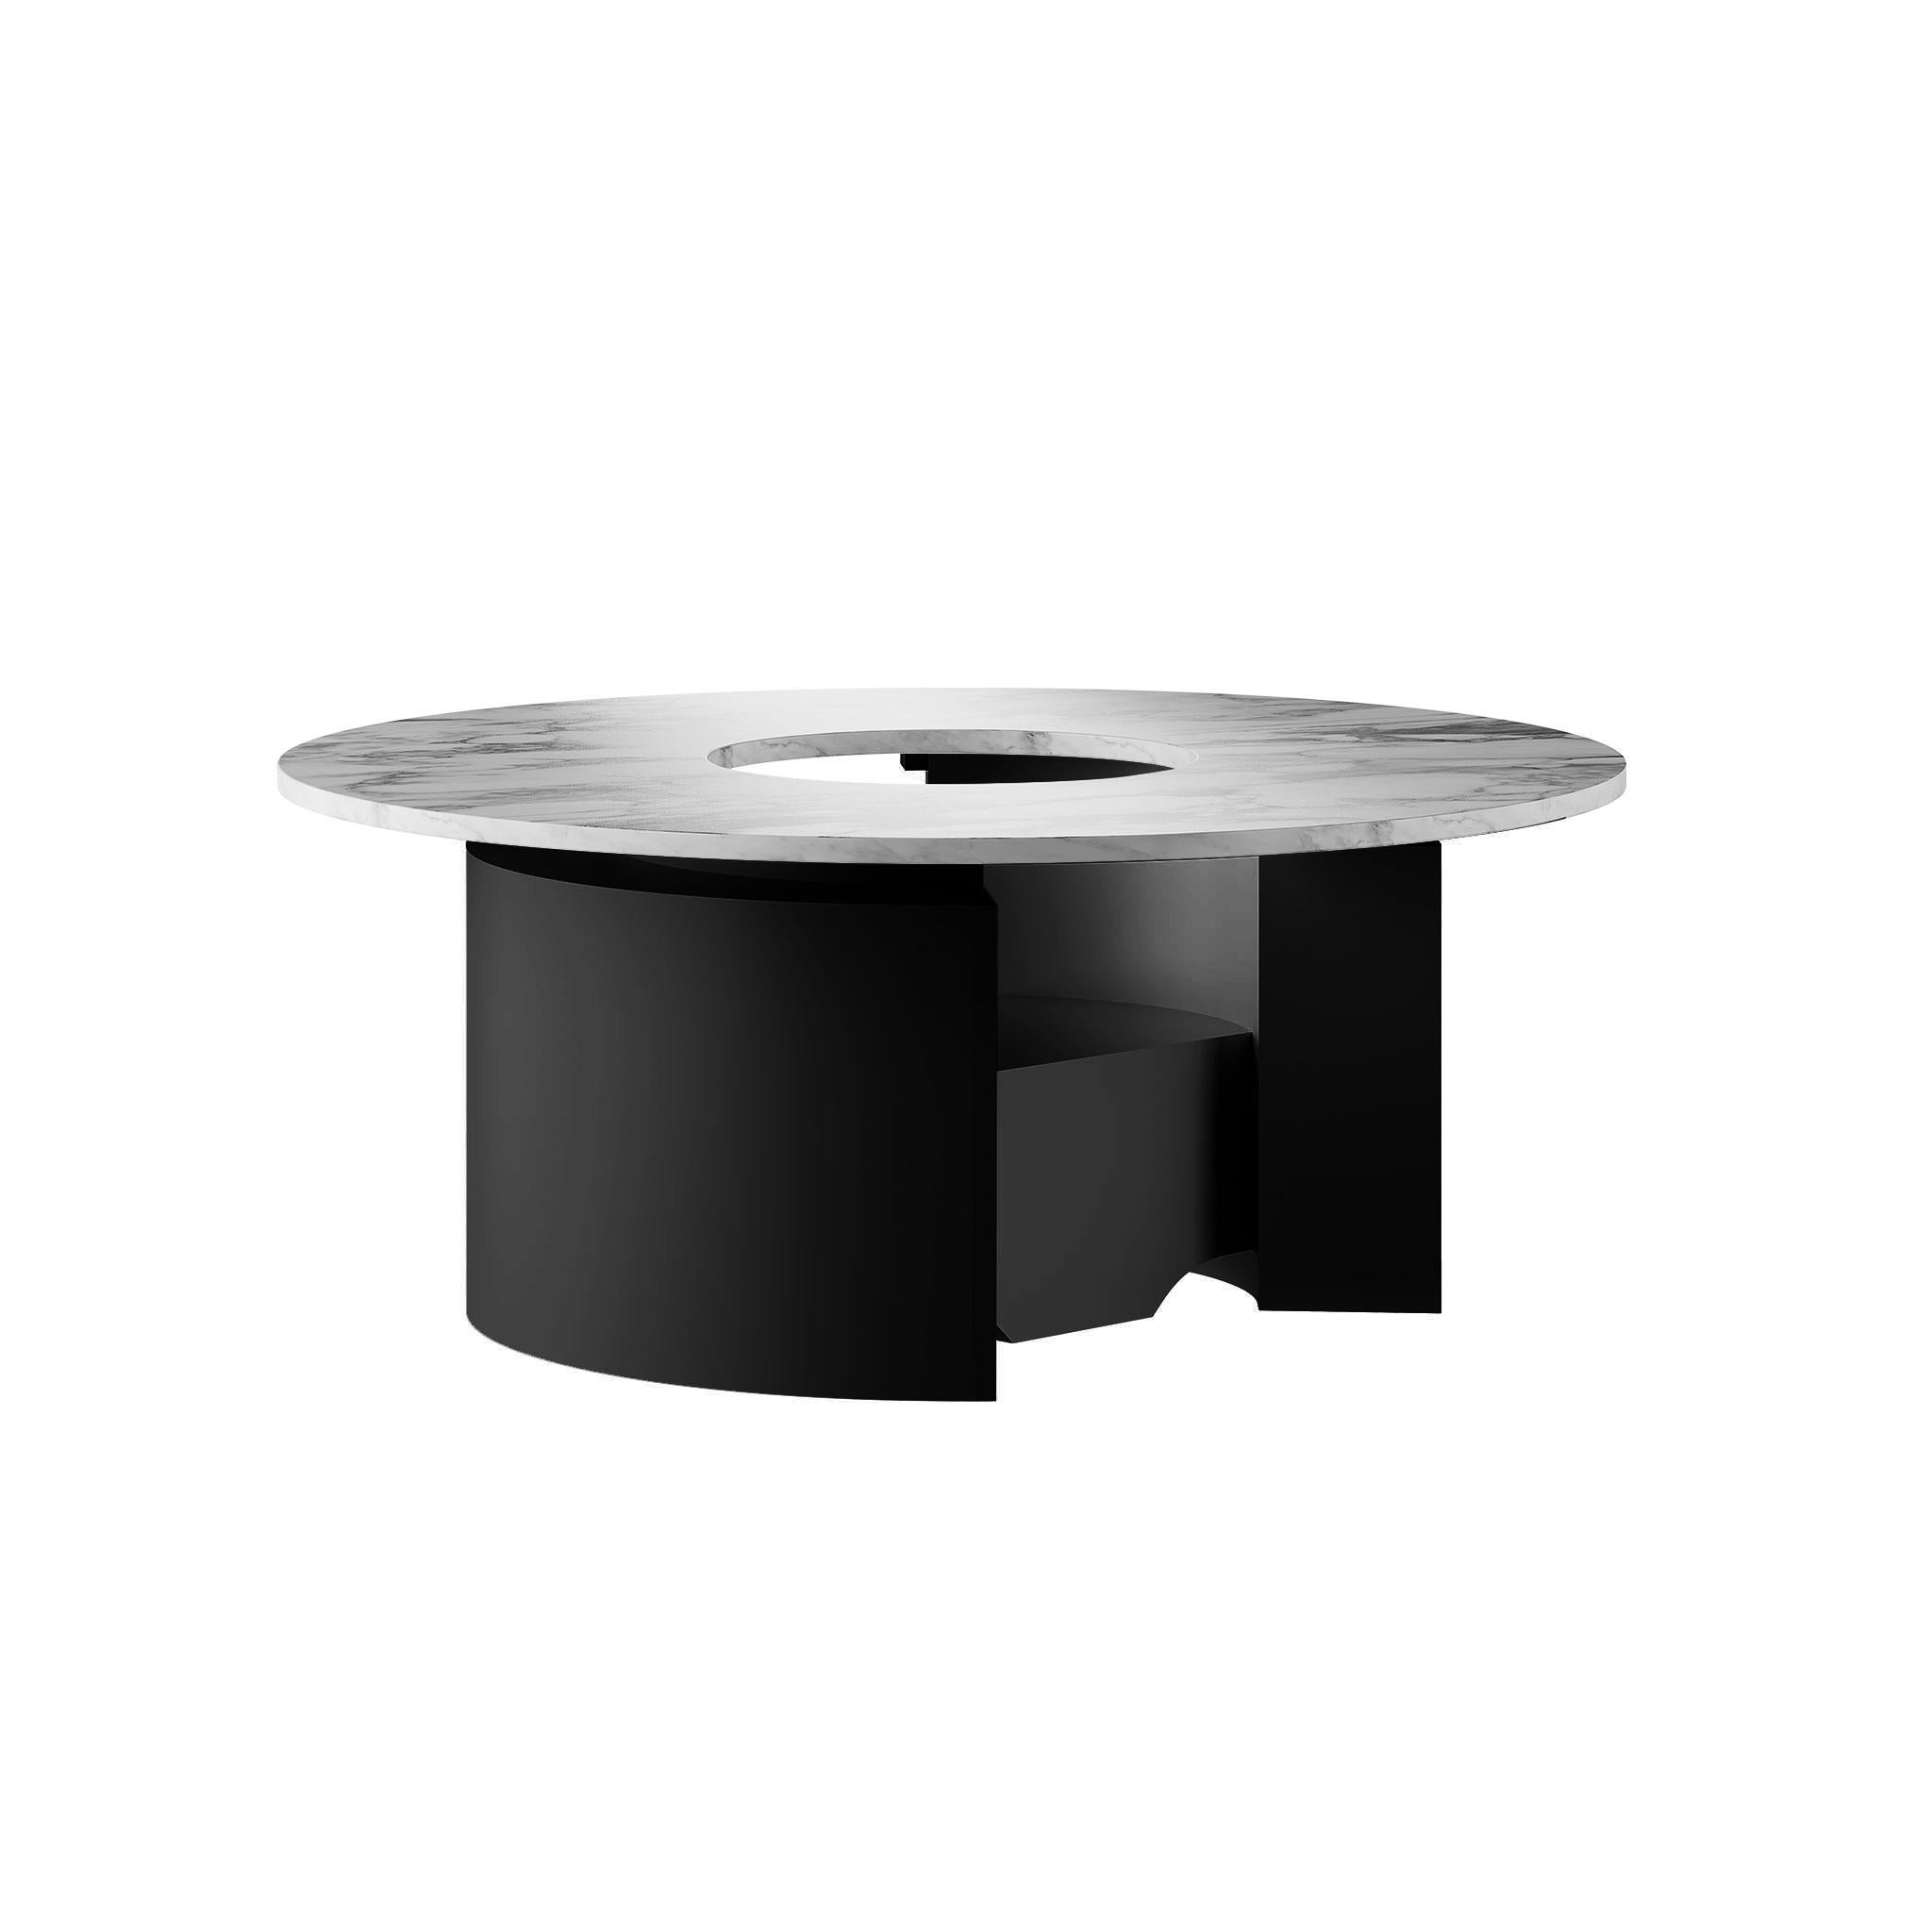 European Minimal Modern Round Center Table Calacatta White Marble Top Black Matte Lacquer For Sale